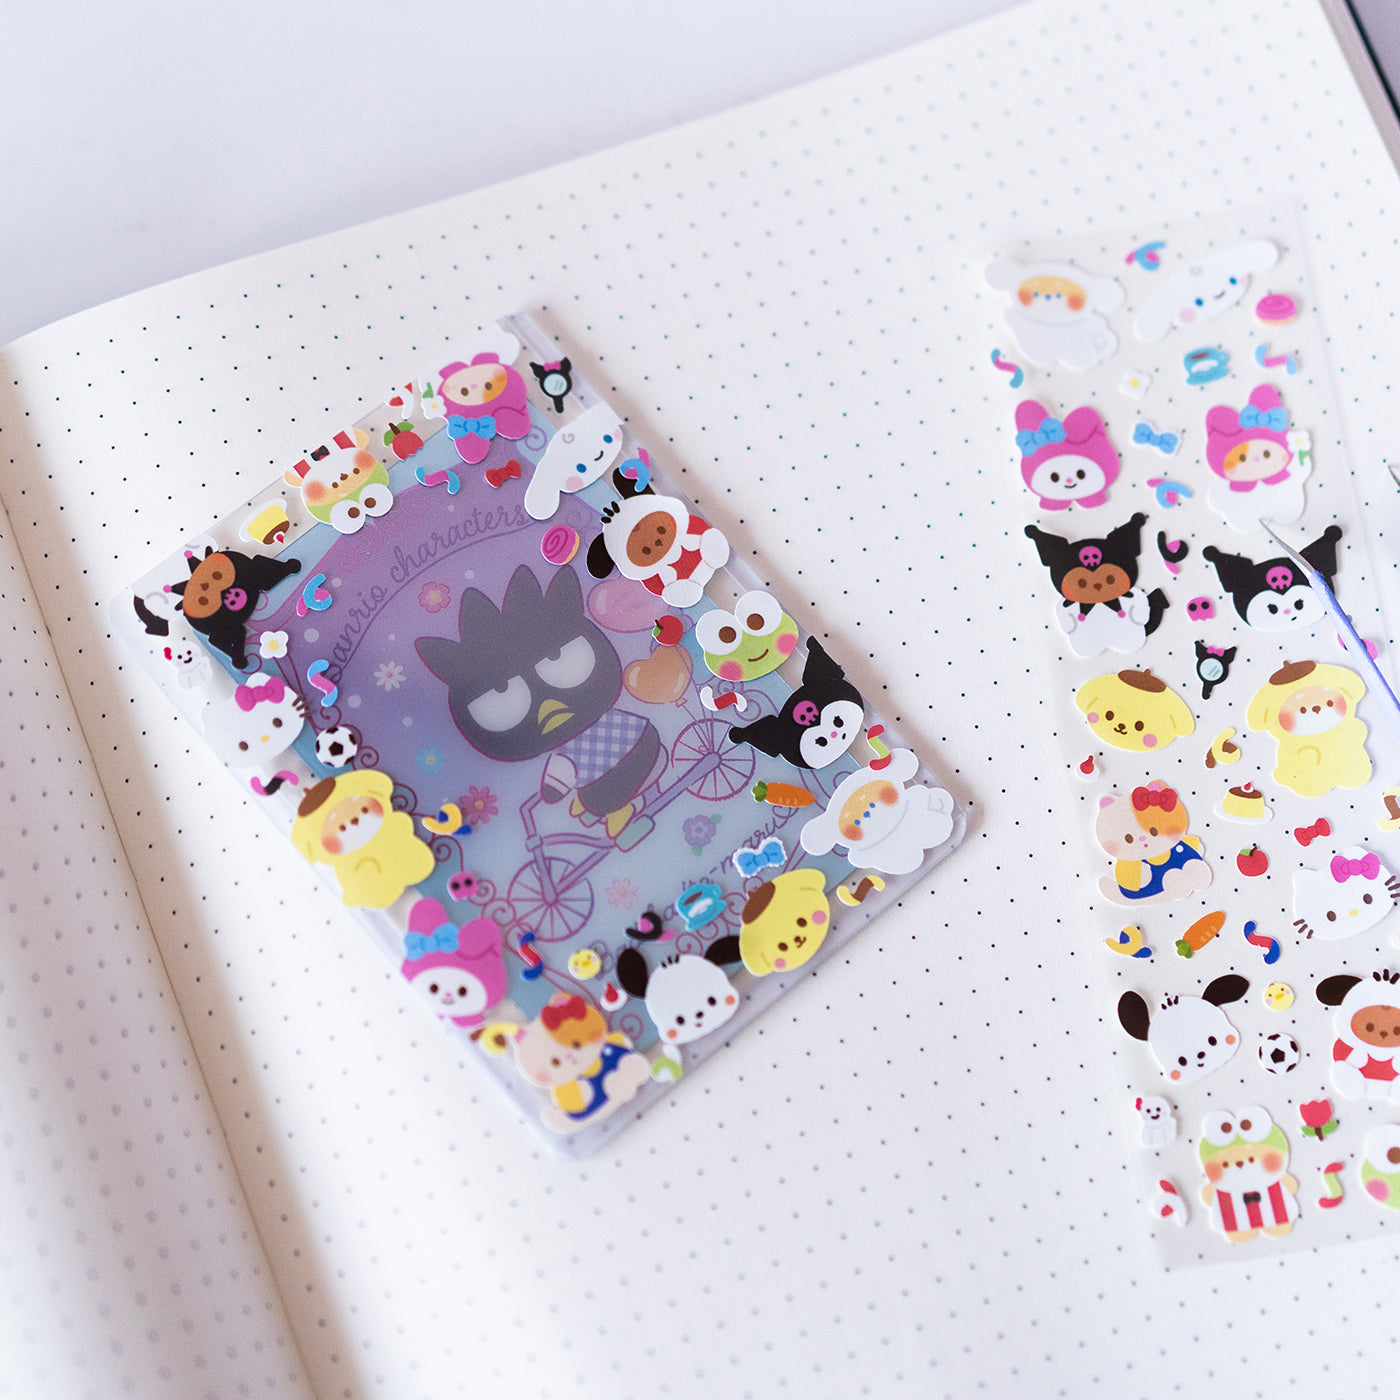 *new* Sanrio Characters and Minty Friends Fan Art Journal Sticker Sheet